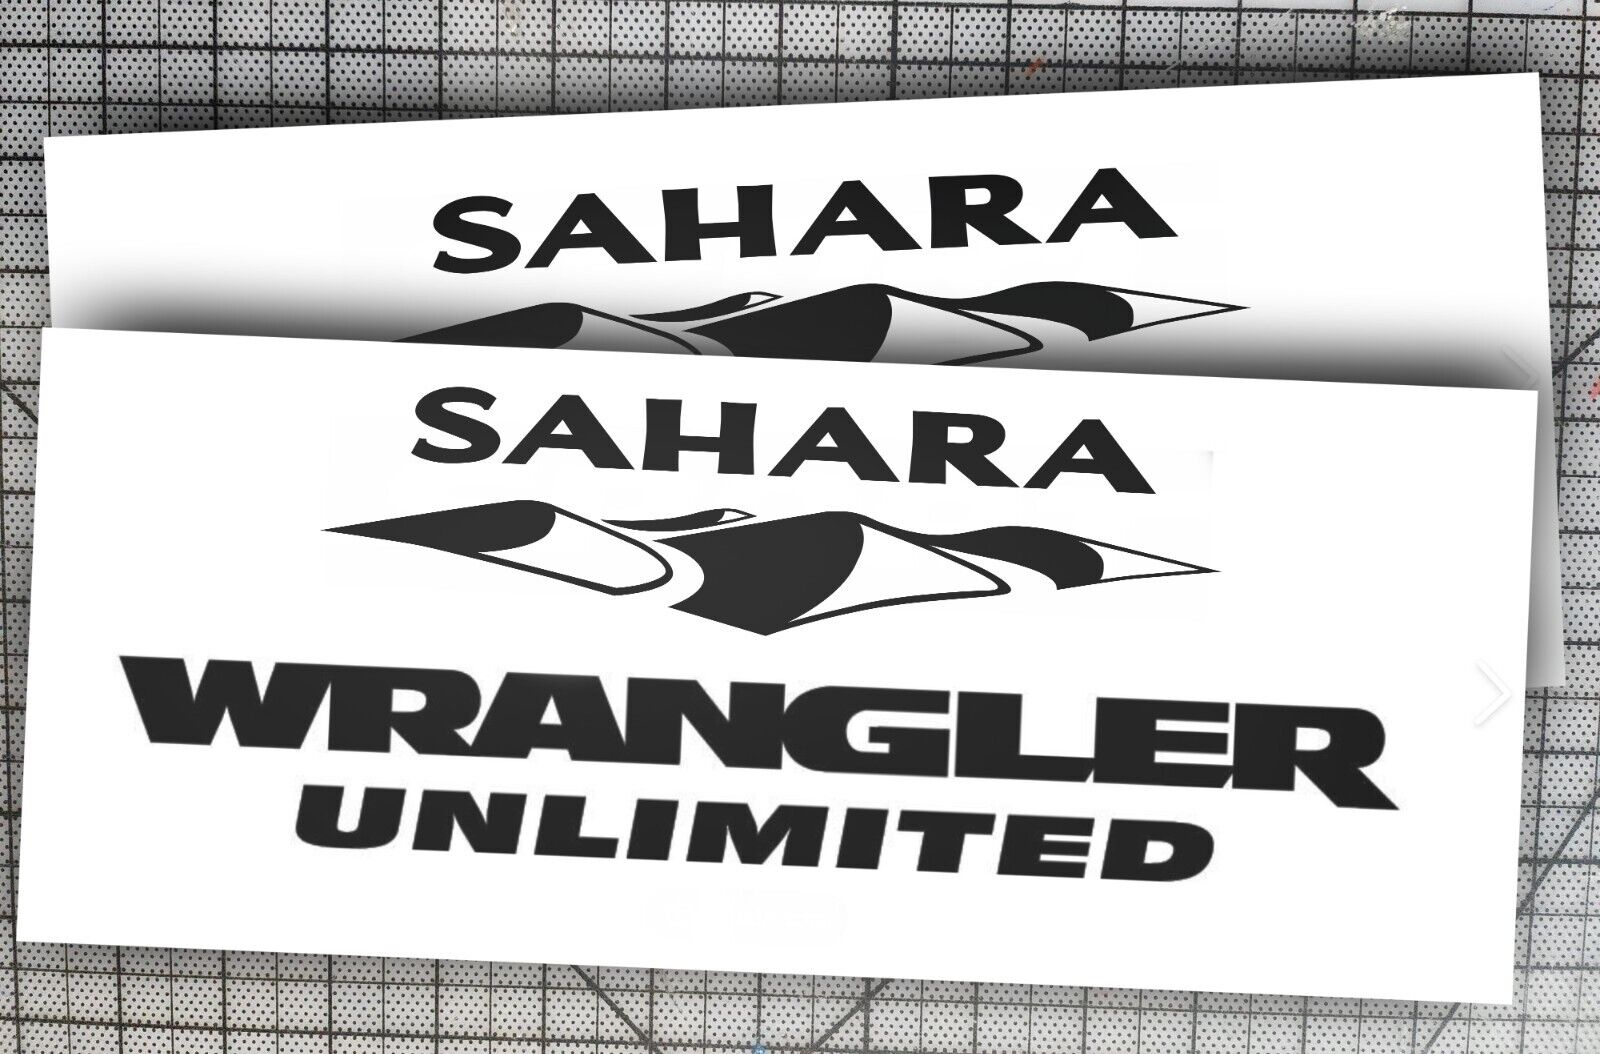 Sahara Wrangler Unlimited Decals for Jeep Wrangler JK Fender 